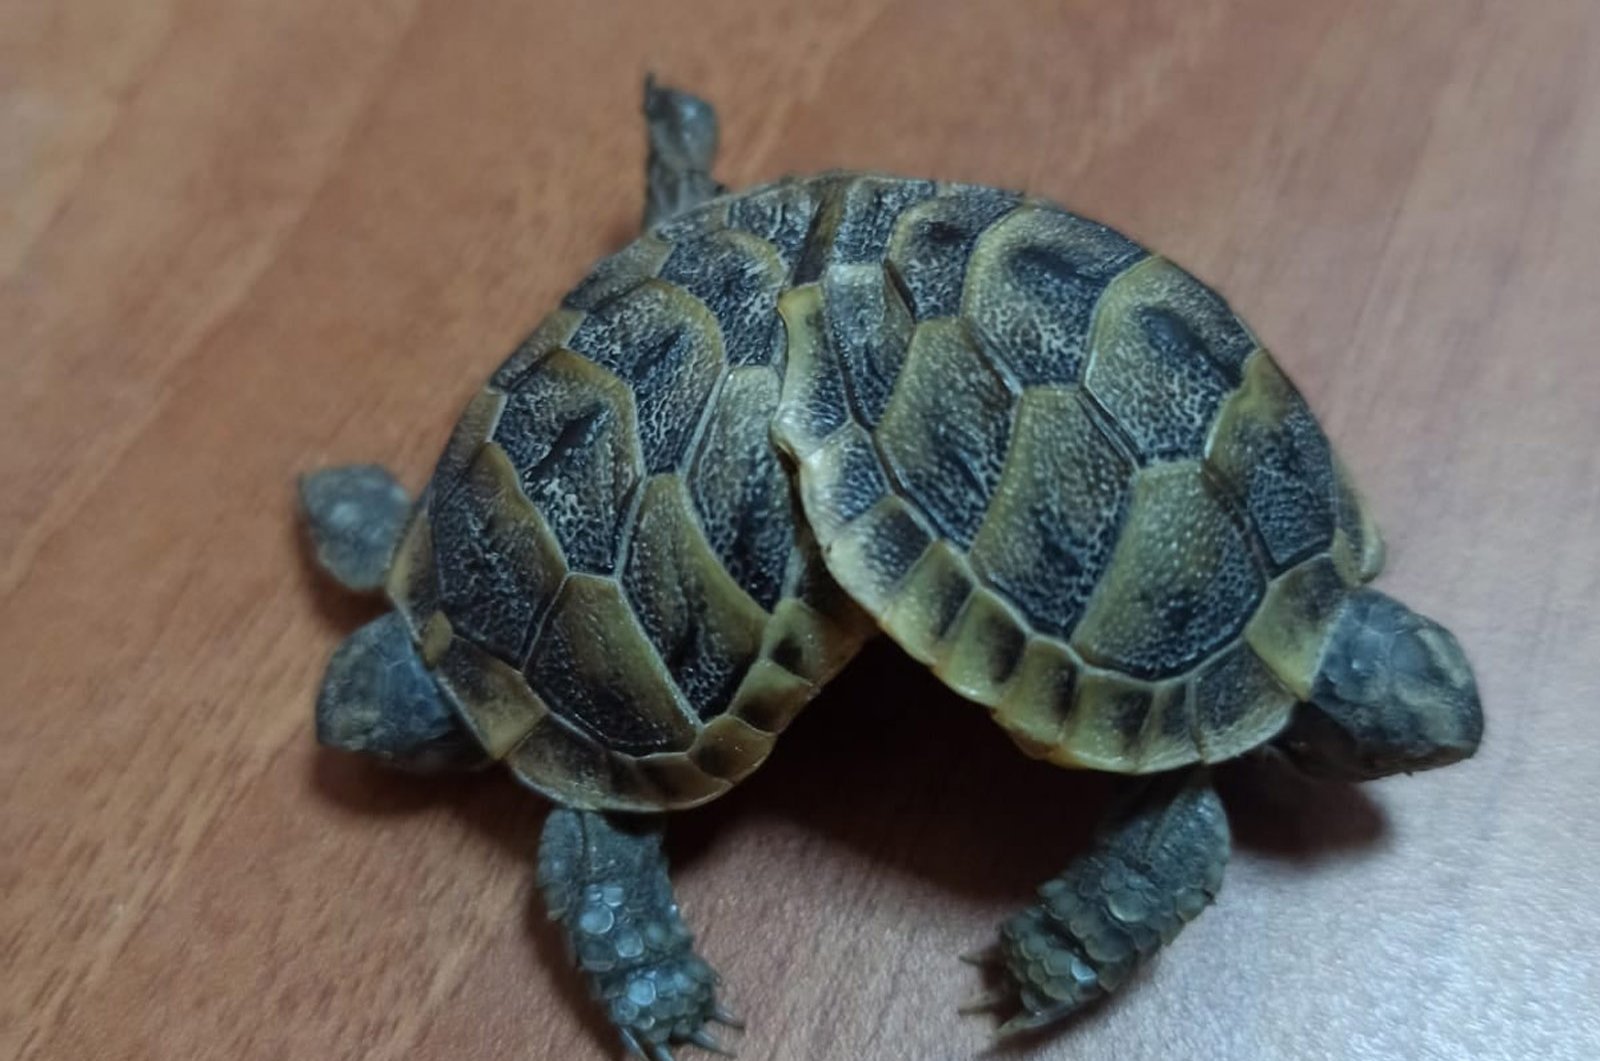 Kura-kura kembar siam ditemukan di travertine Turki yang terkenal di dunia